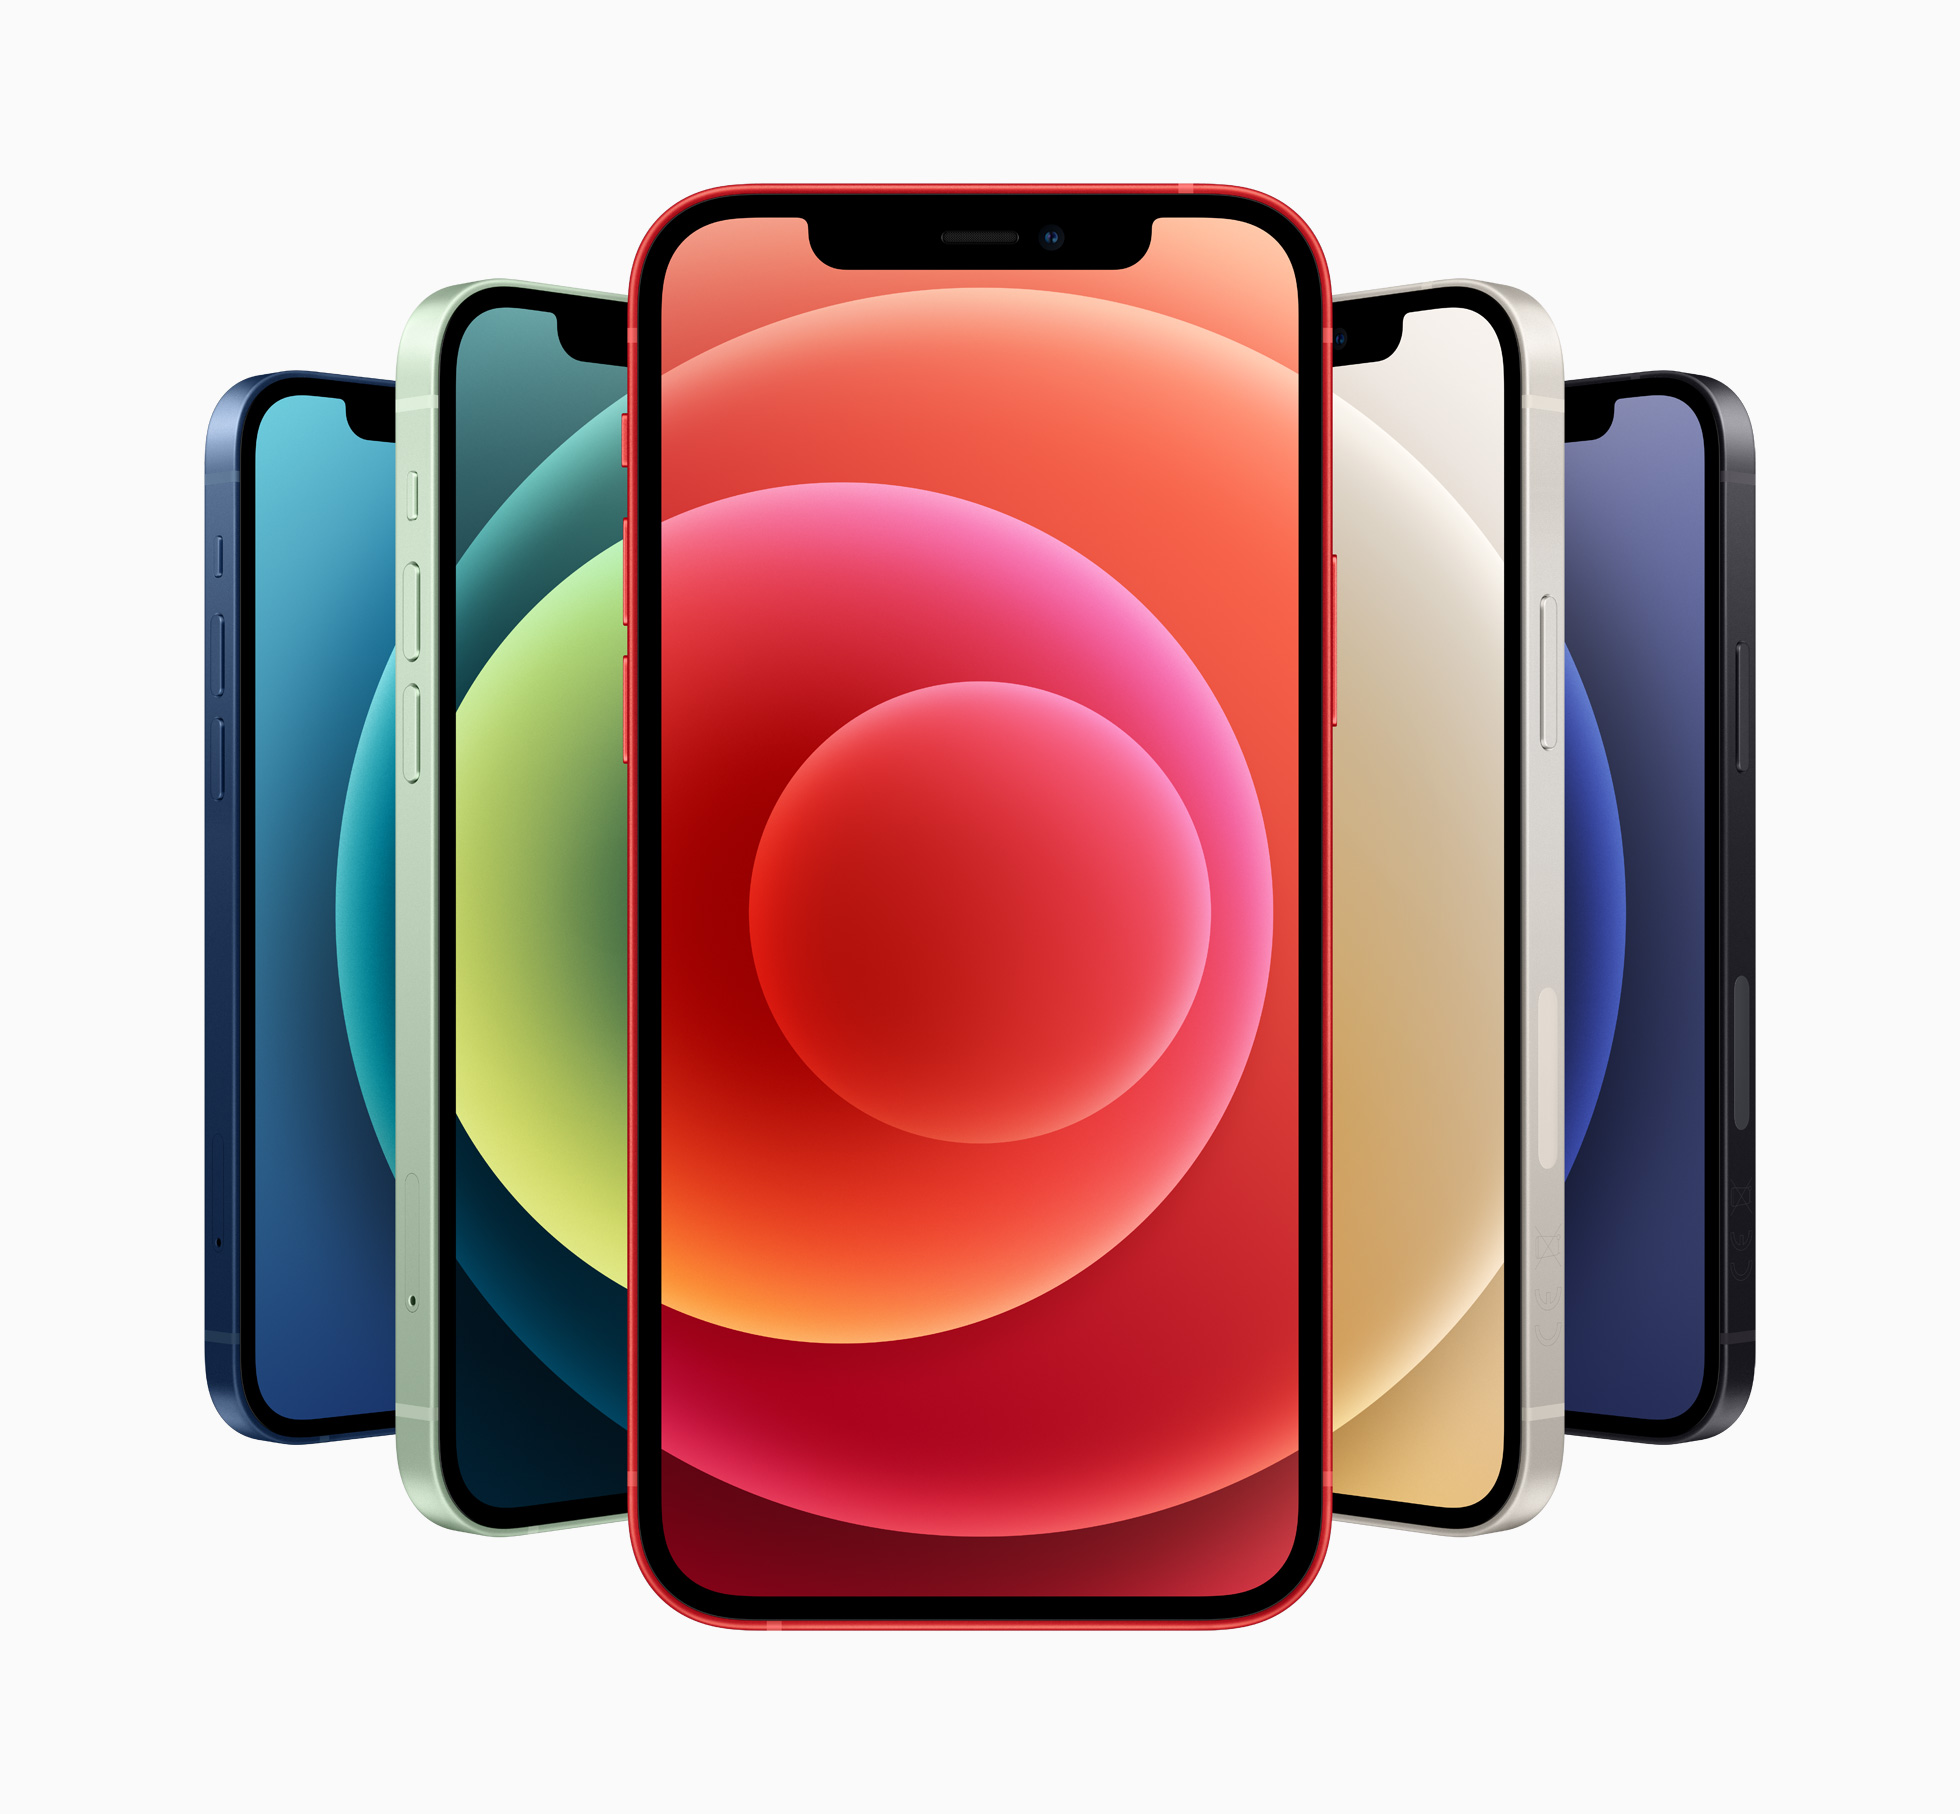 apple_iphone-12_new-design_10132020_big.jpg.large_2x.jpg